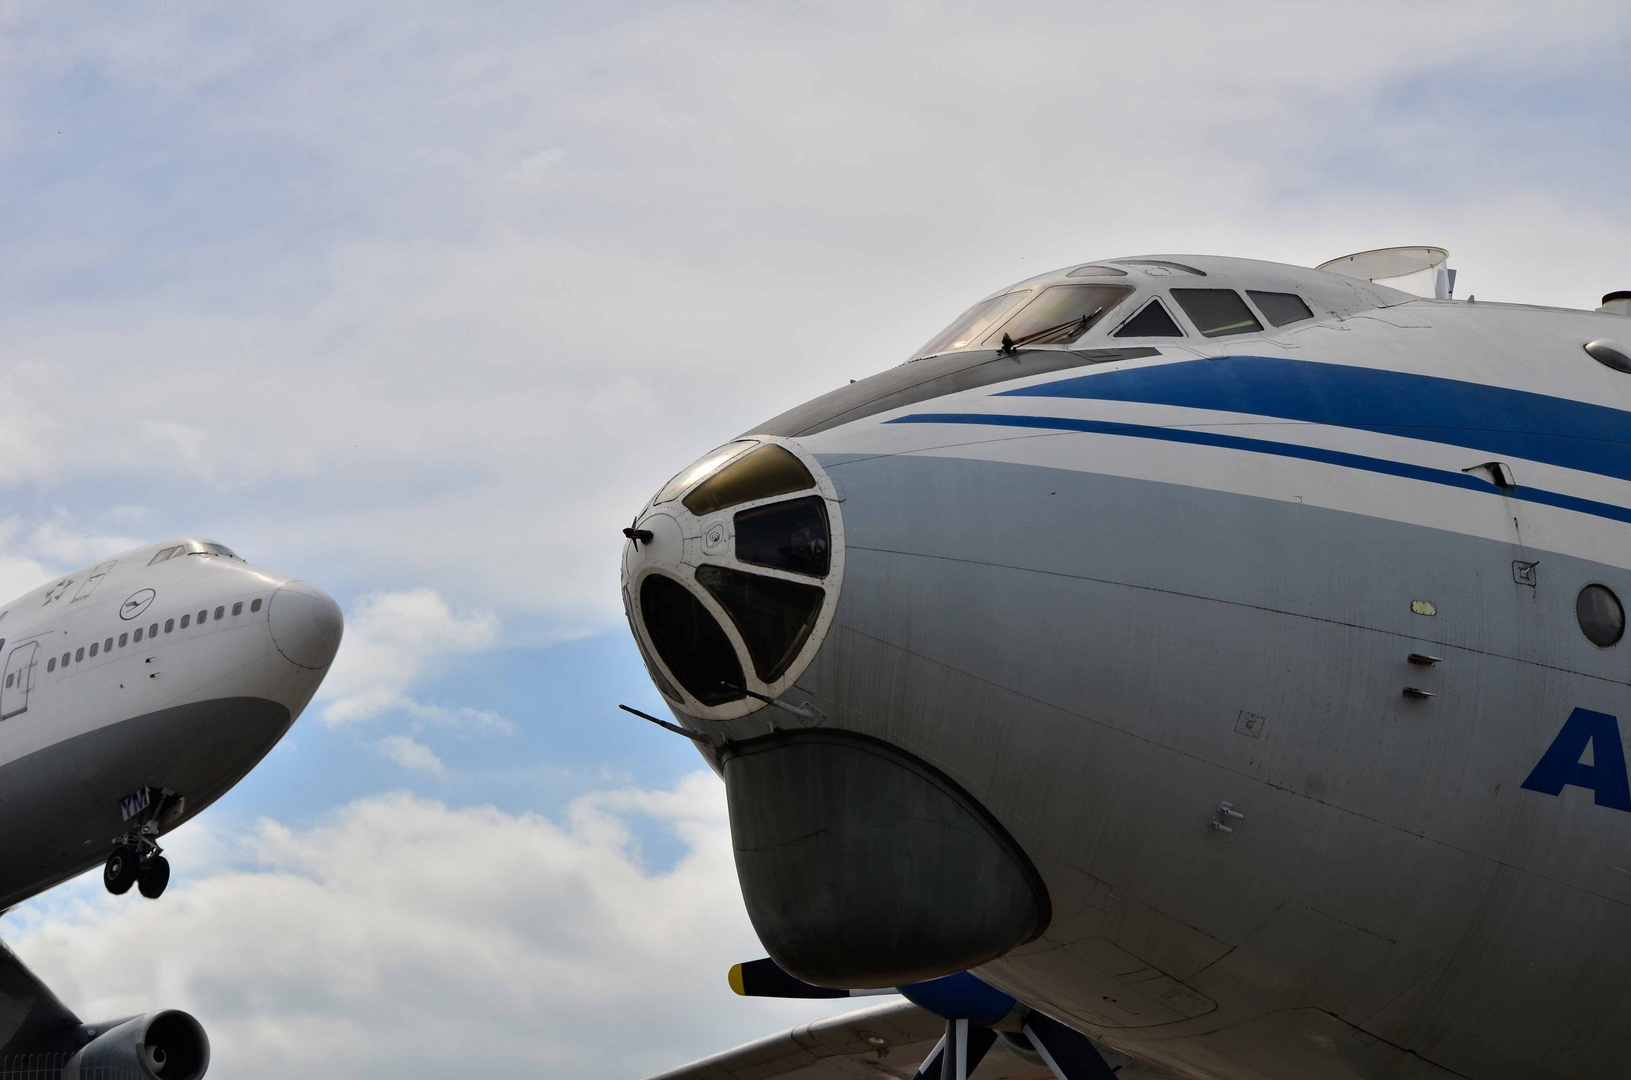 East meets west Boing 747 vs Antonov AN 22